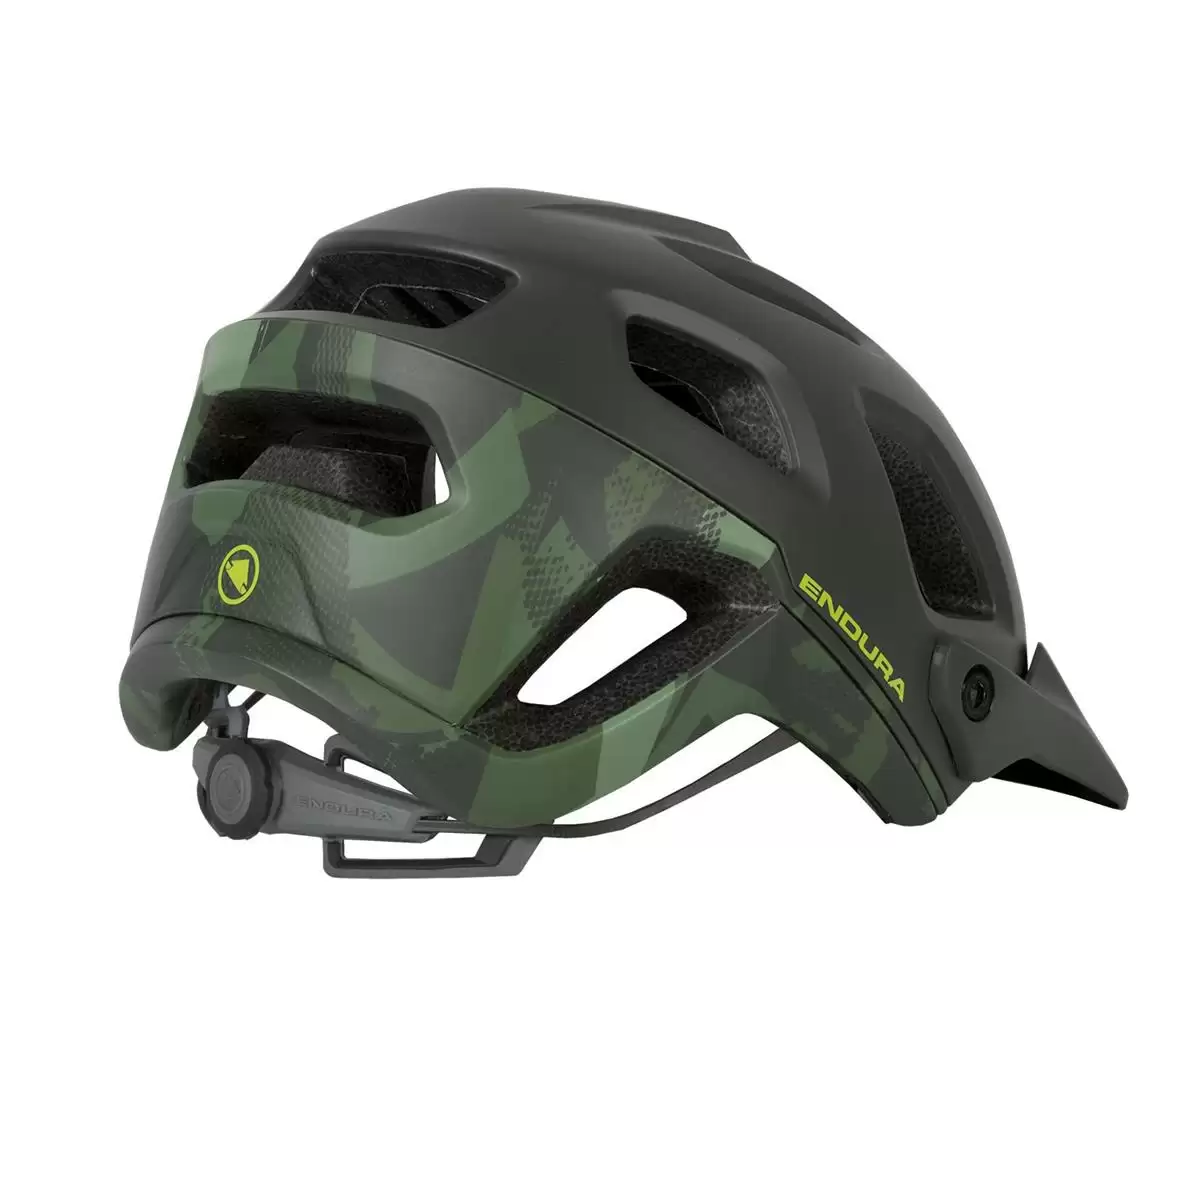 helmet SingleTrack Helmet II green size M/L (55-59cm) #1